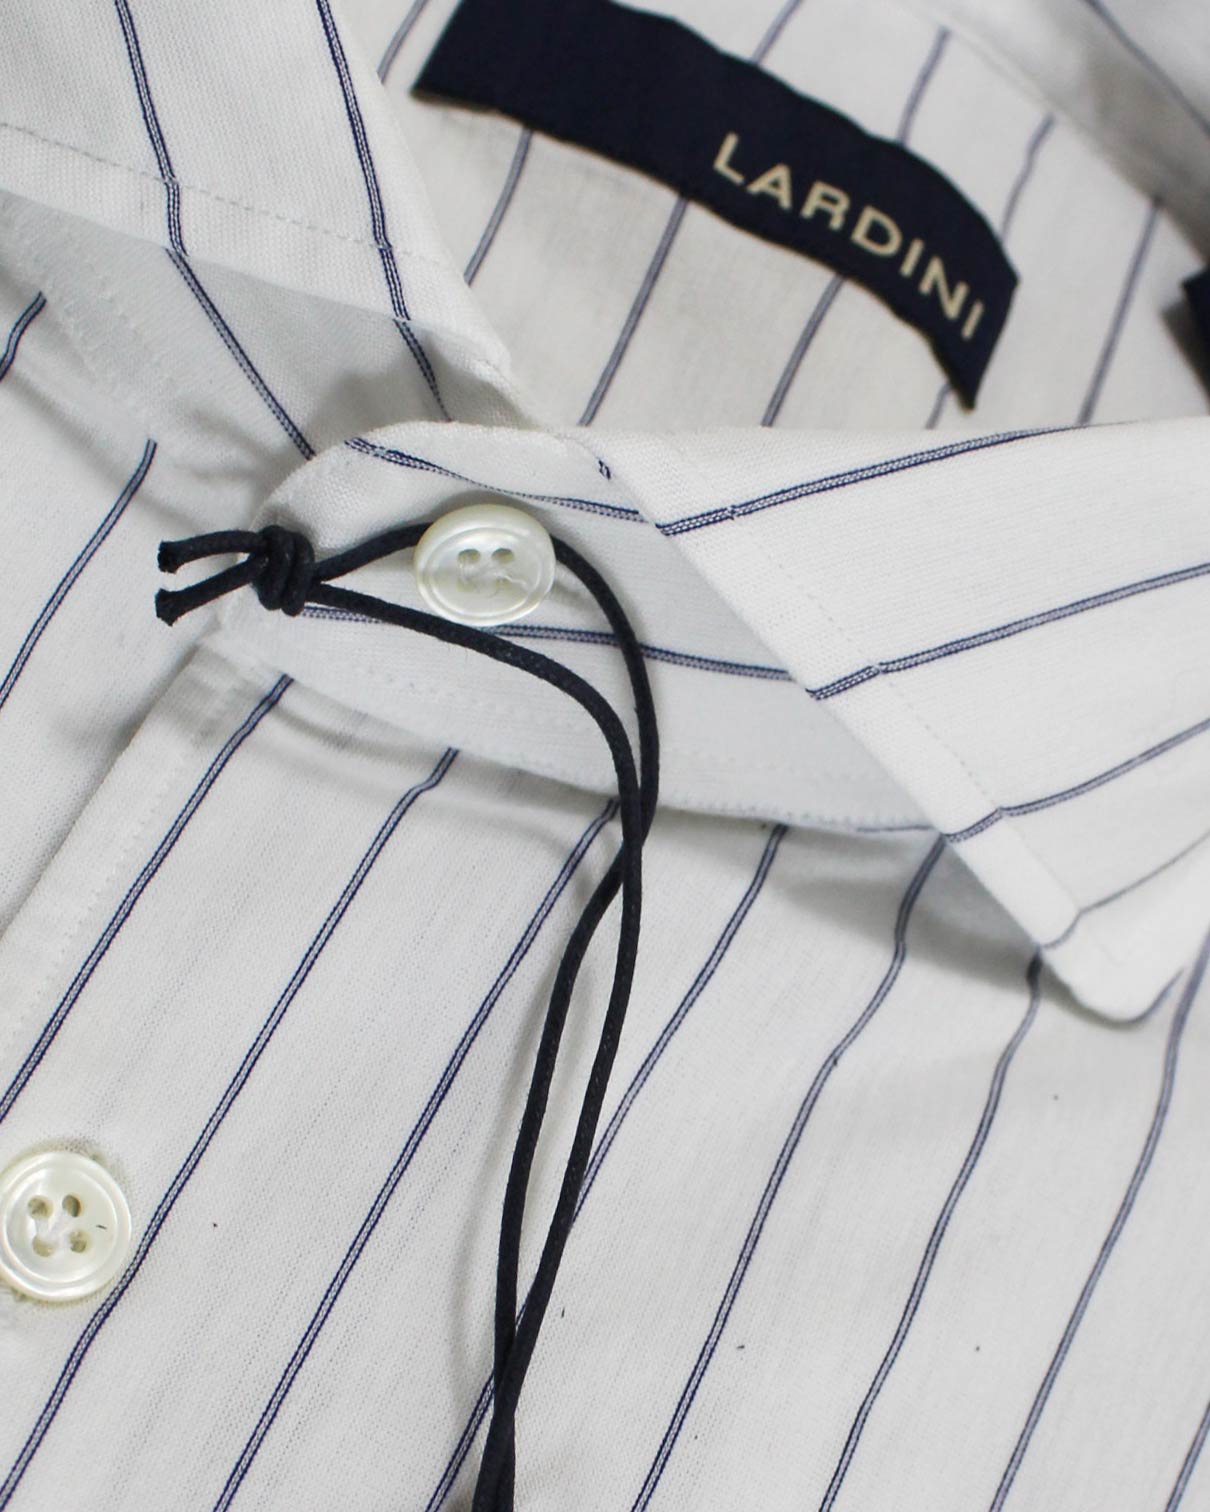 Lardini Shirt White Navy Stripes 